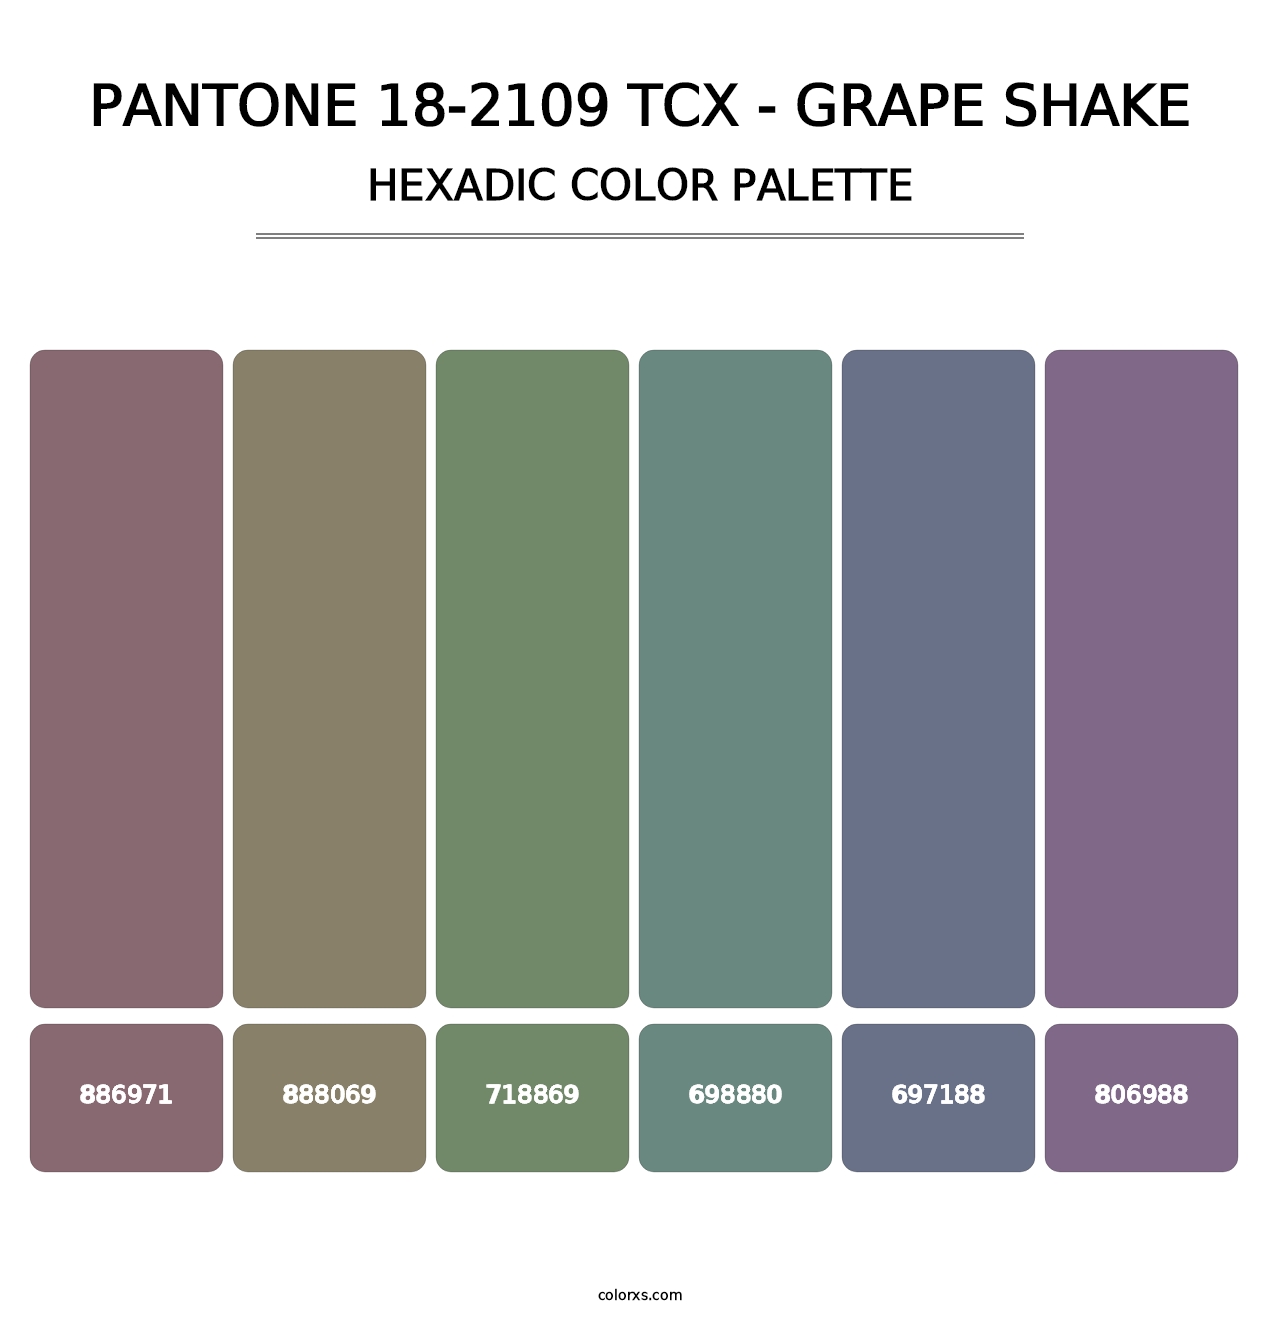 PANTONE 18-2109 TCX - Grape Shake - Hexadic Color Palette